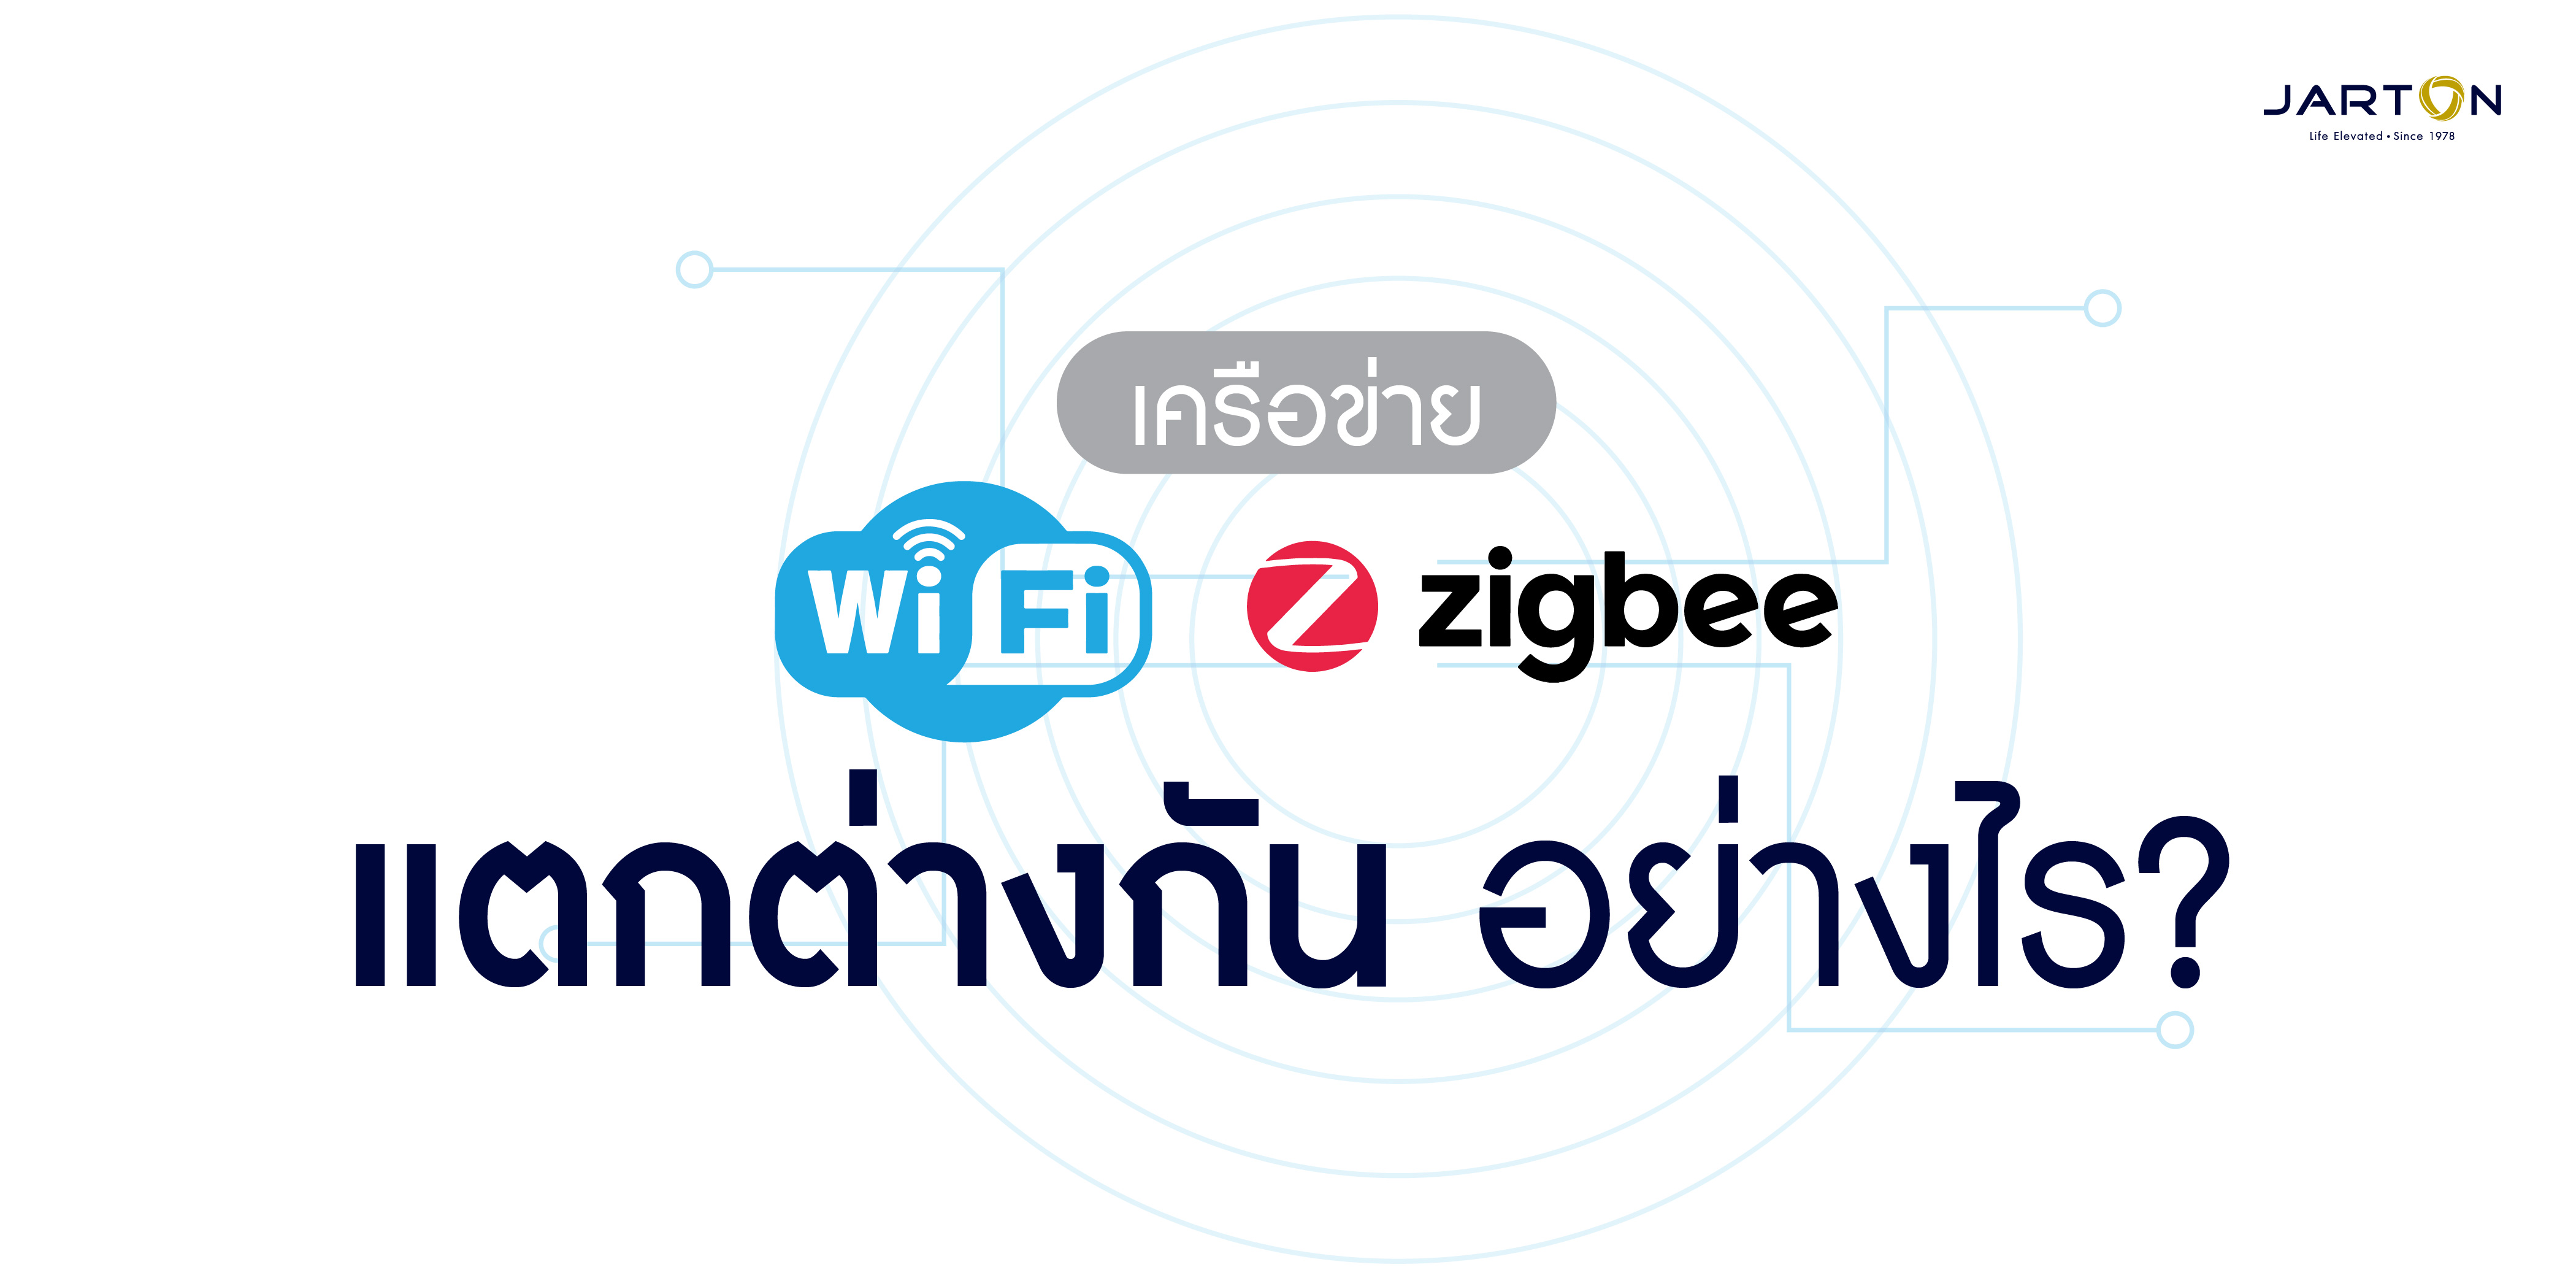 Wifi กับ Zigbee ต่างกันยังไงนะ?